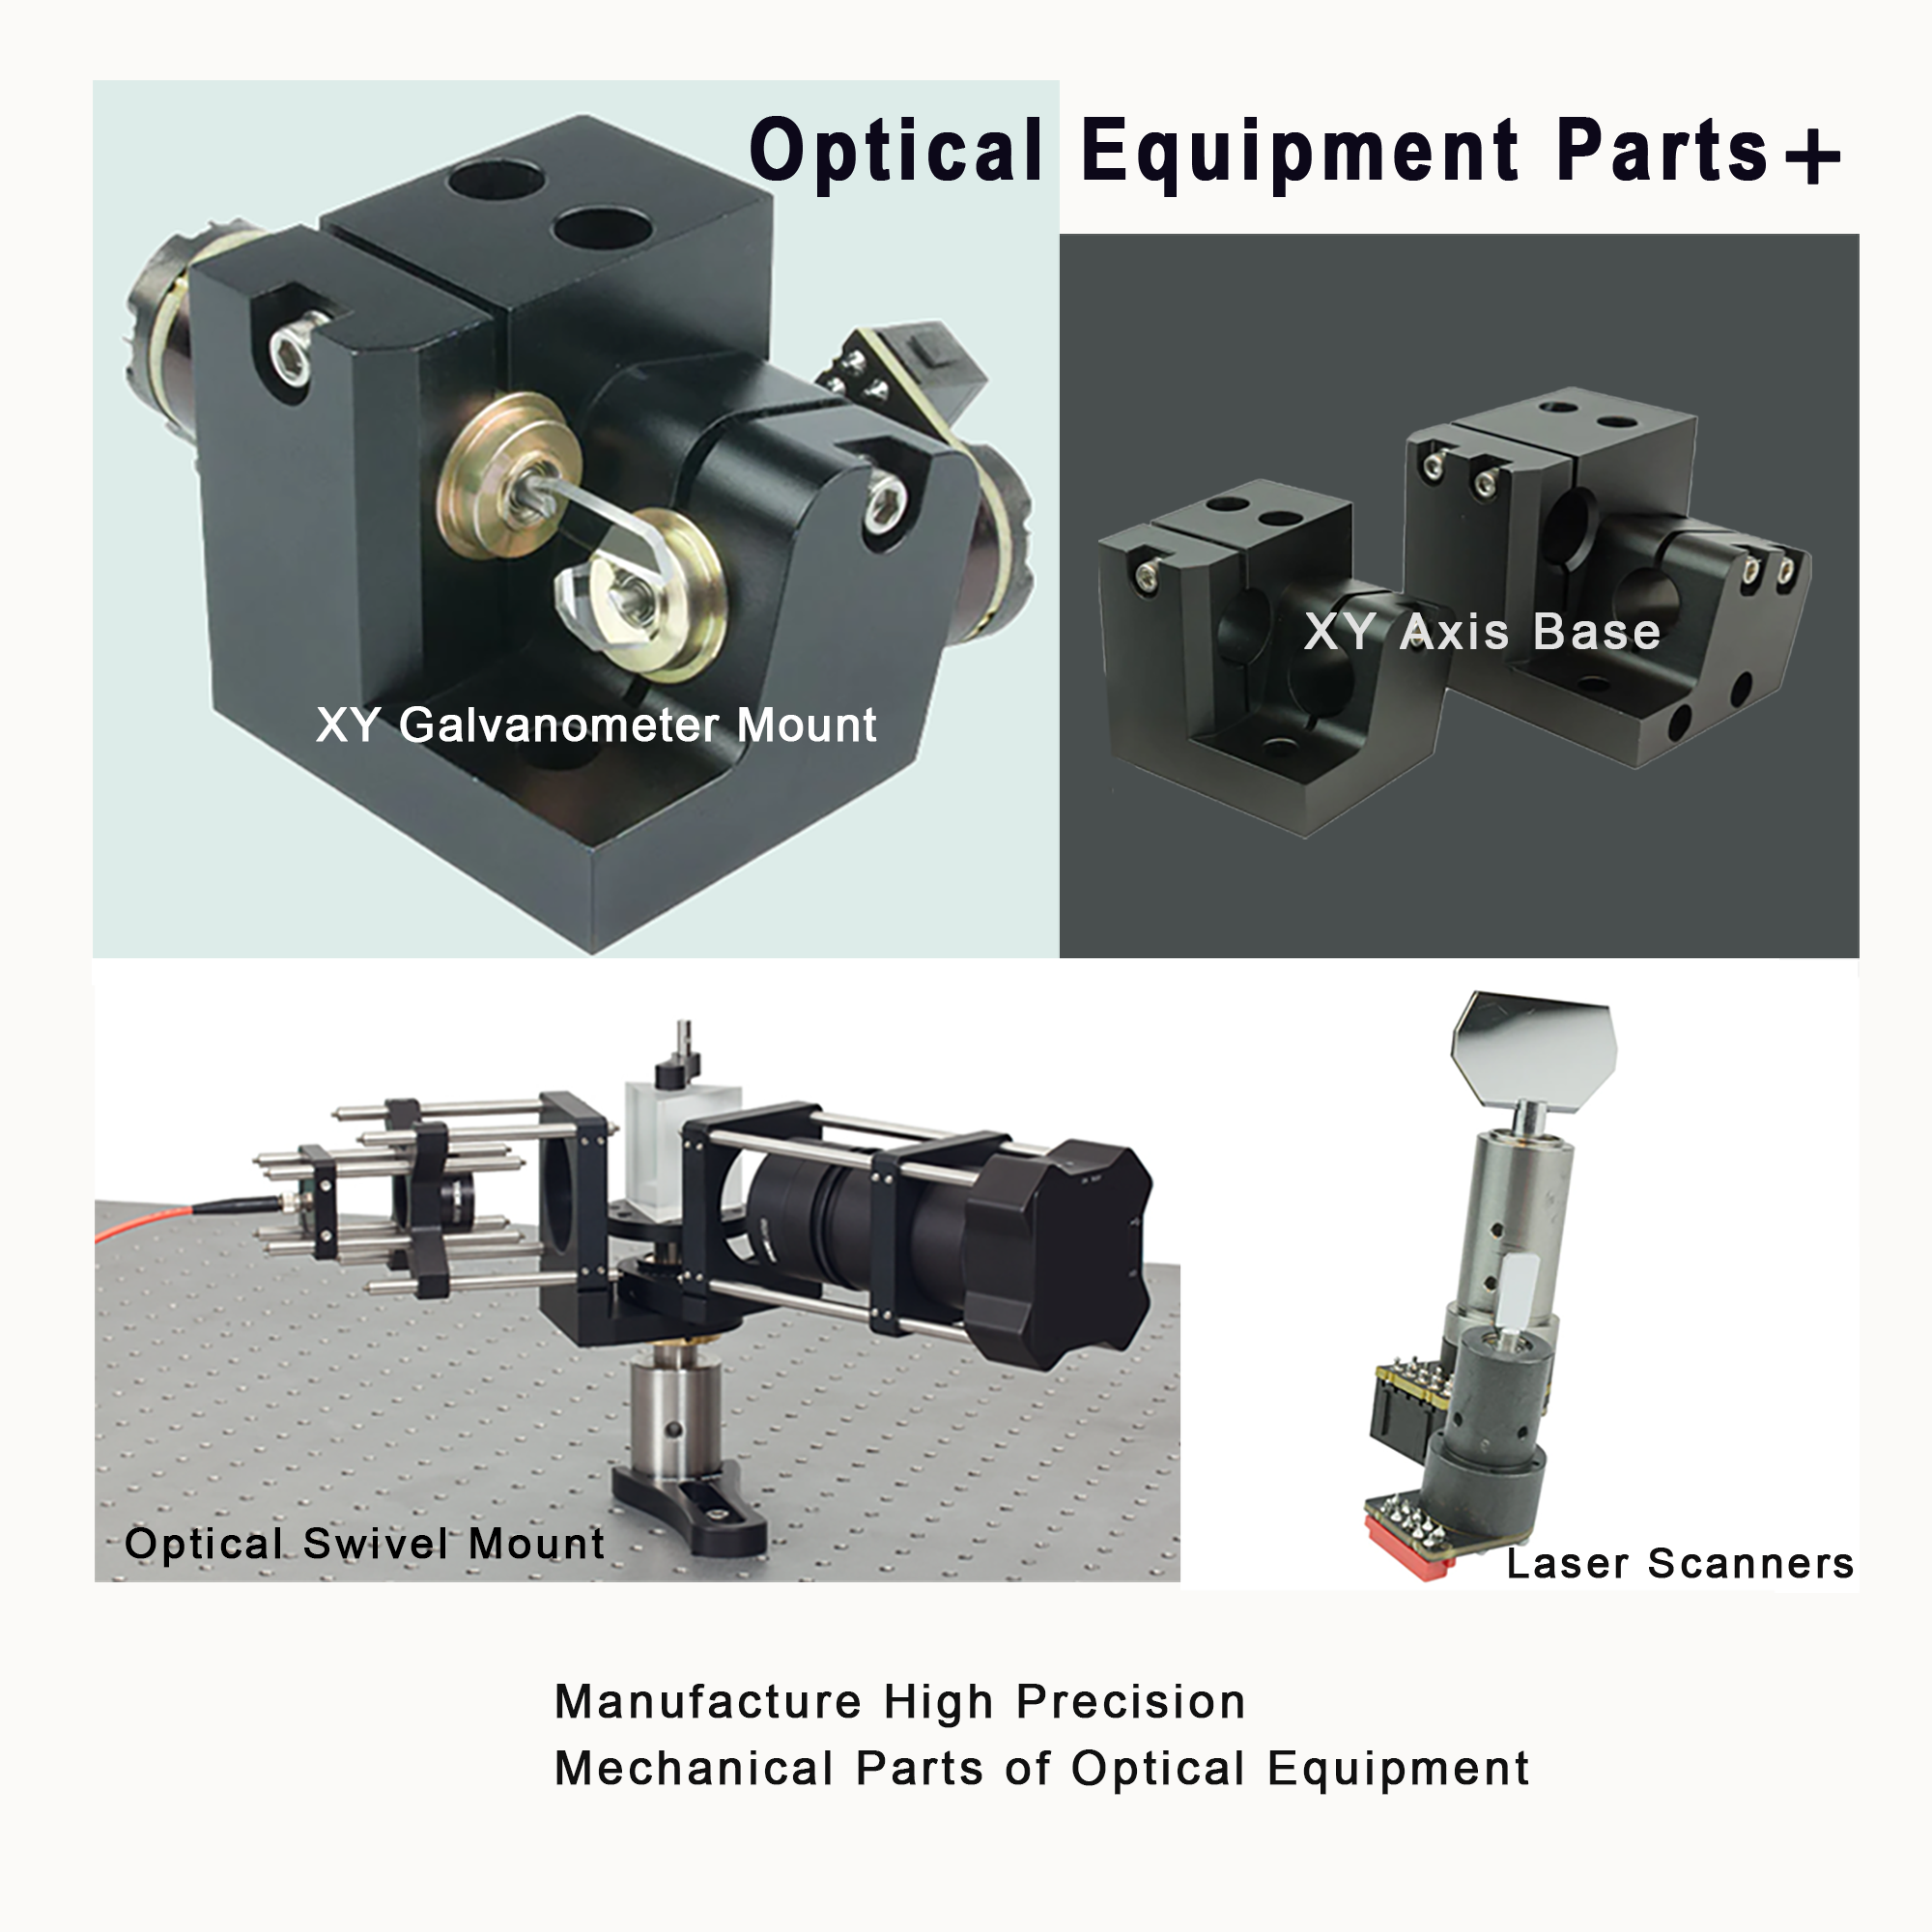 Optical Equipment Parts